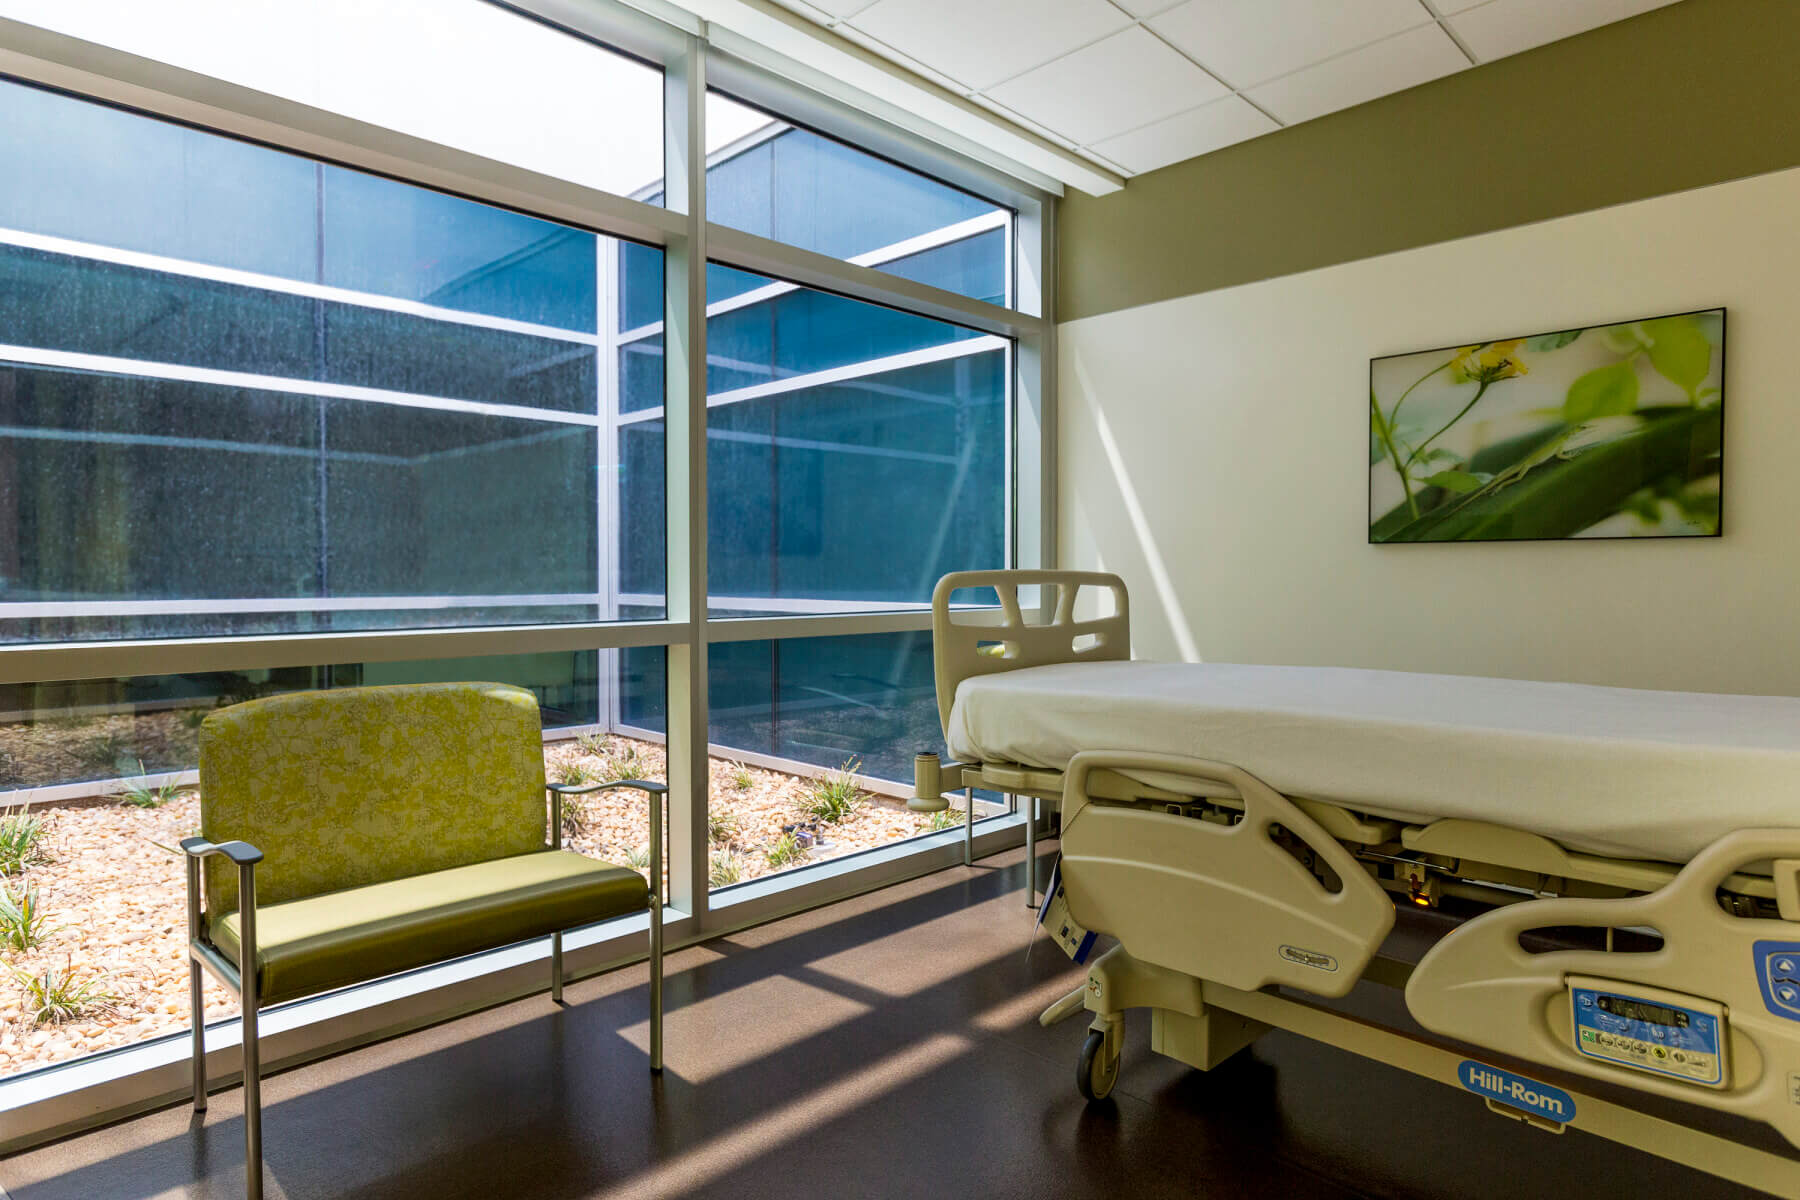 patient room with windows